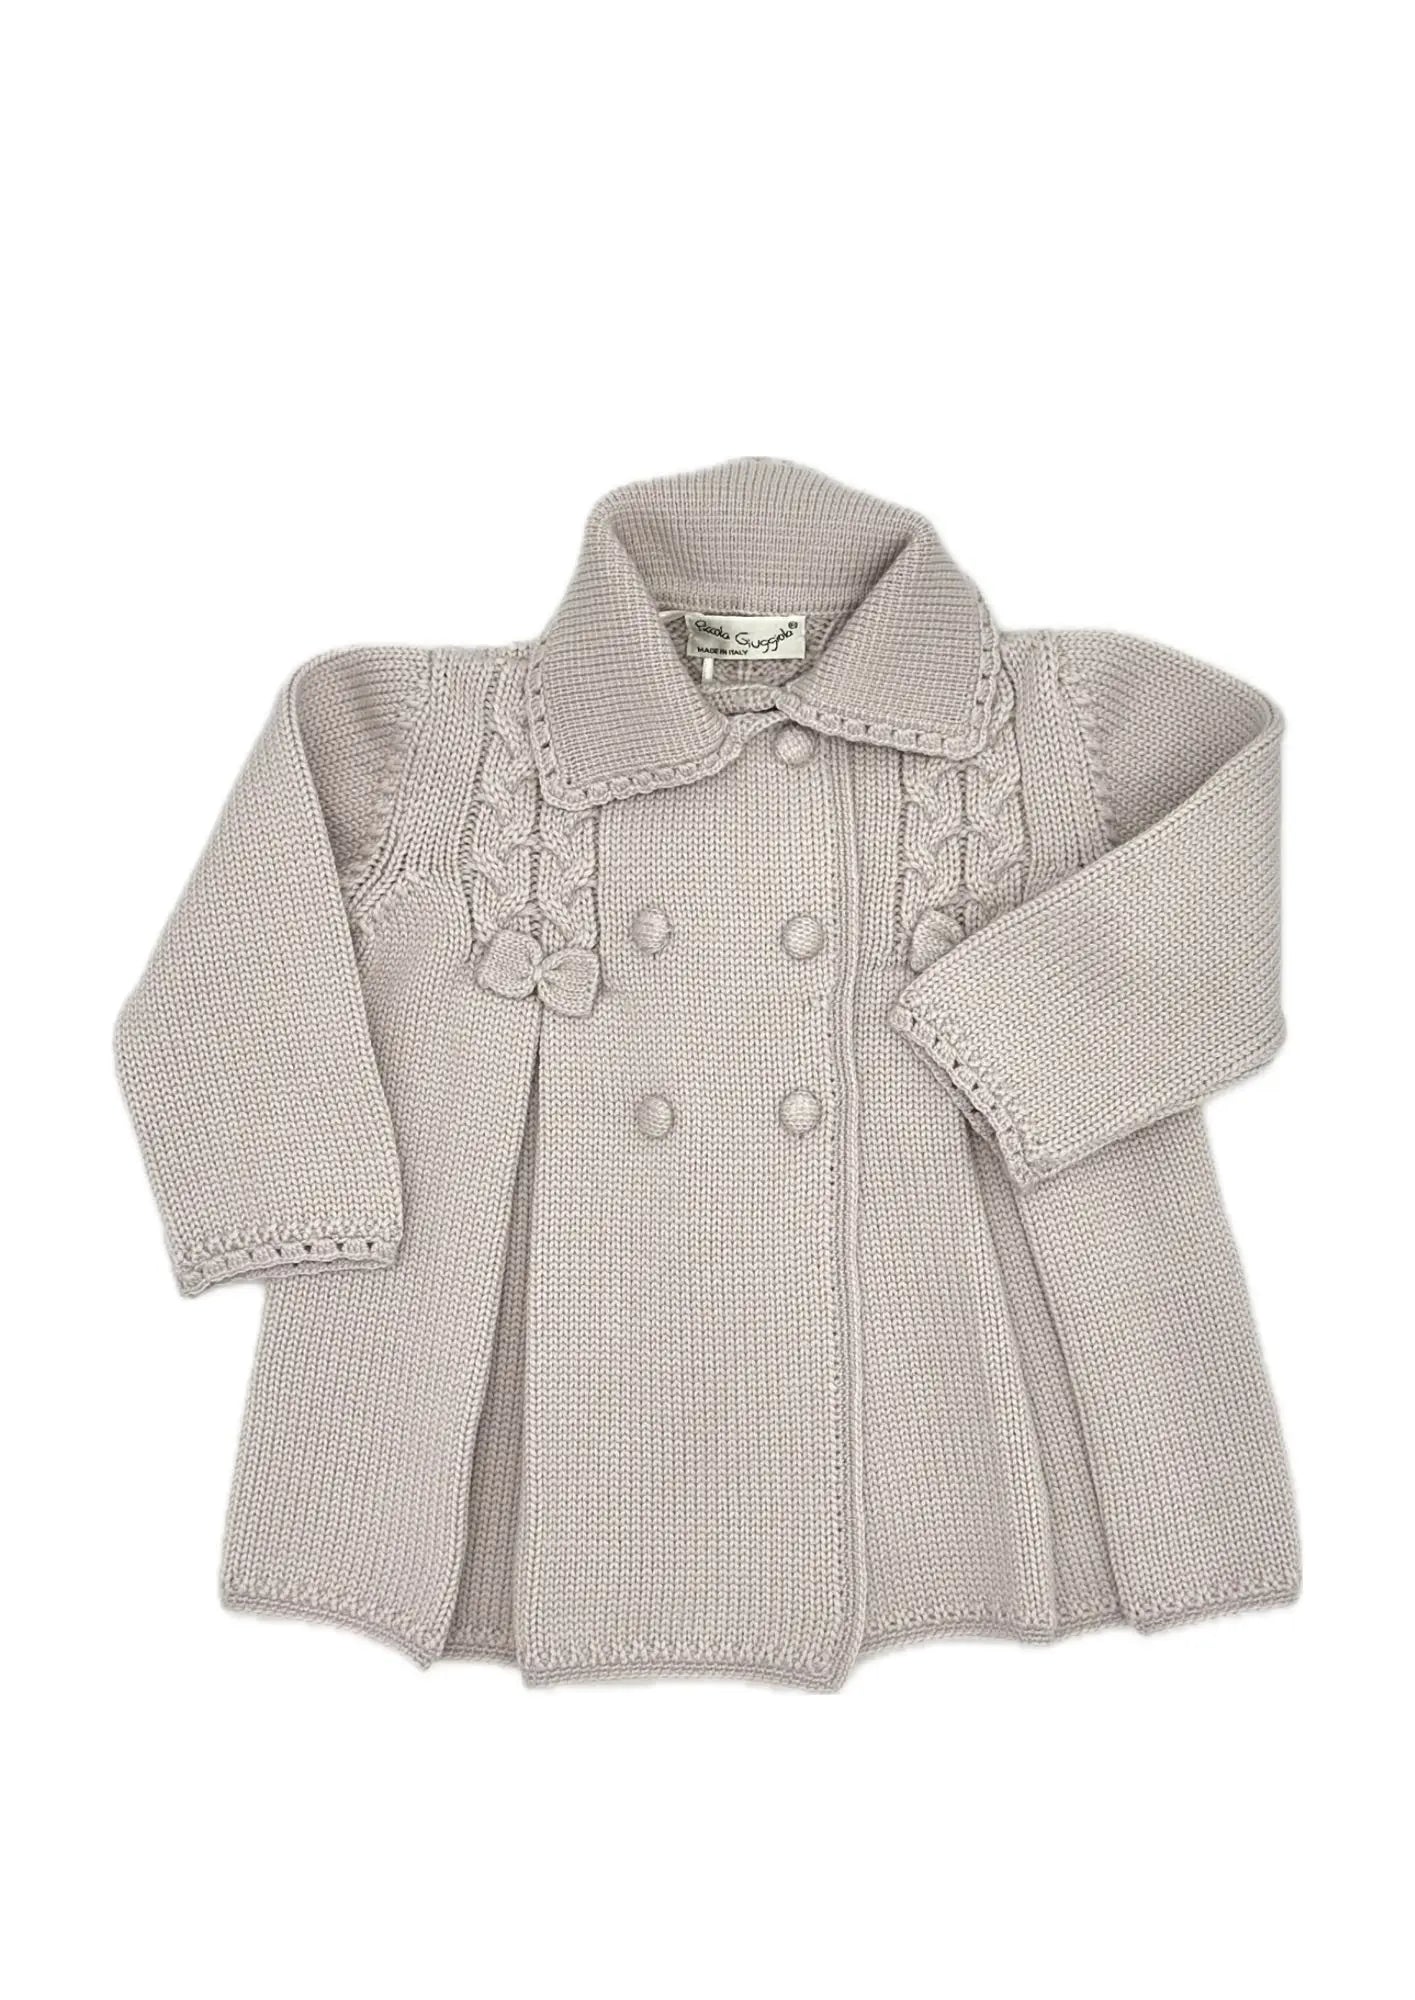 Blue Almonds Ltd Copy of Baby girls hand-knitted coat 'Alaska' Piccola Giuggiola